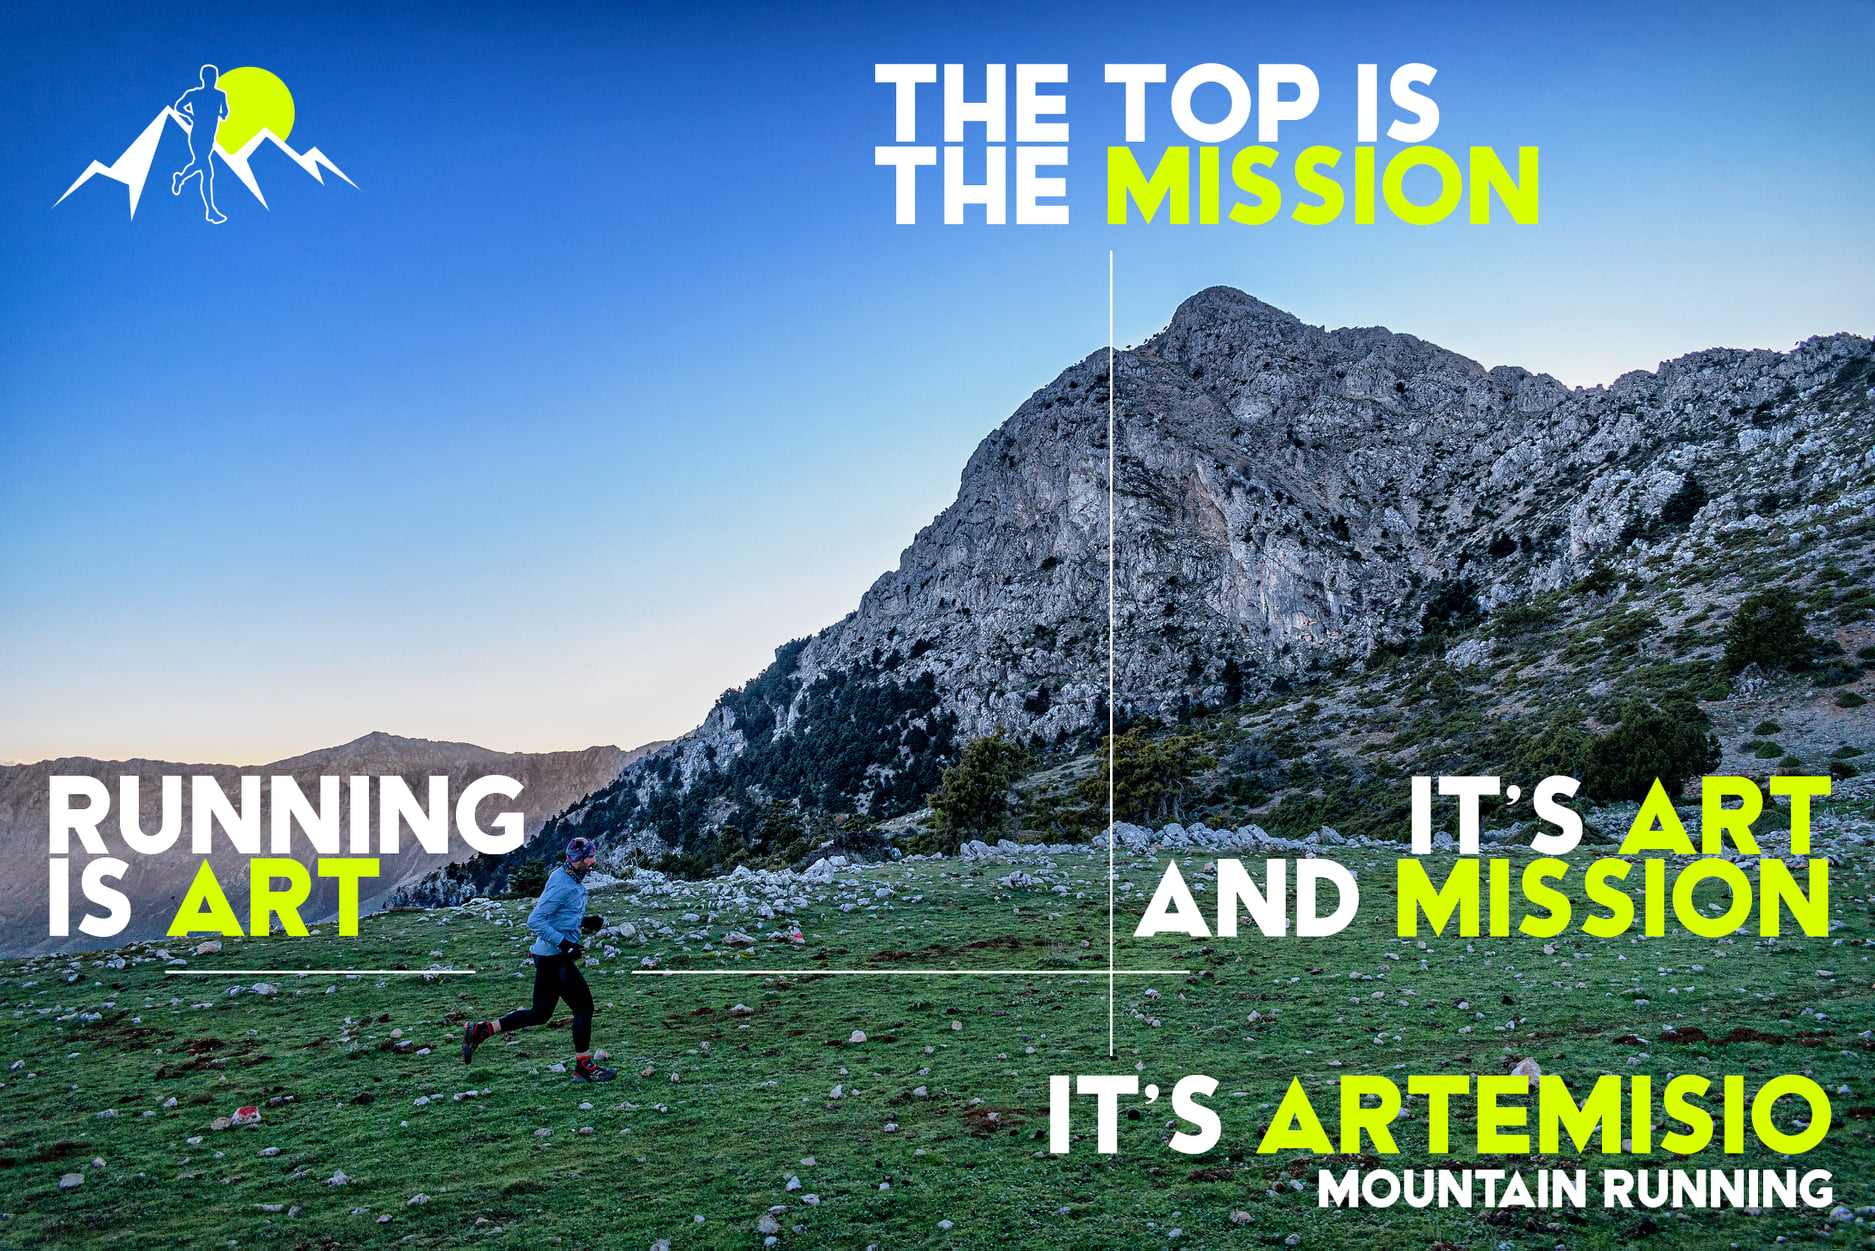 Artemisio Mountain Running 2021: Πέρα από κάθε προσδοκία η συμμετοχή των αθλητών